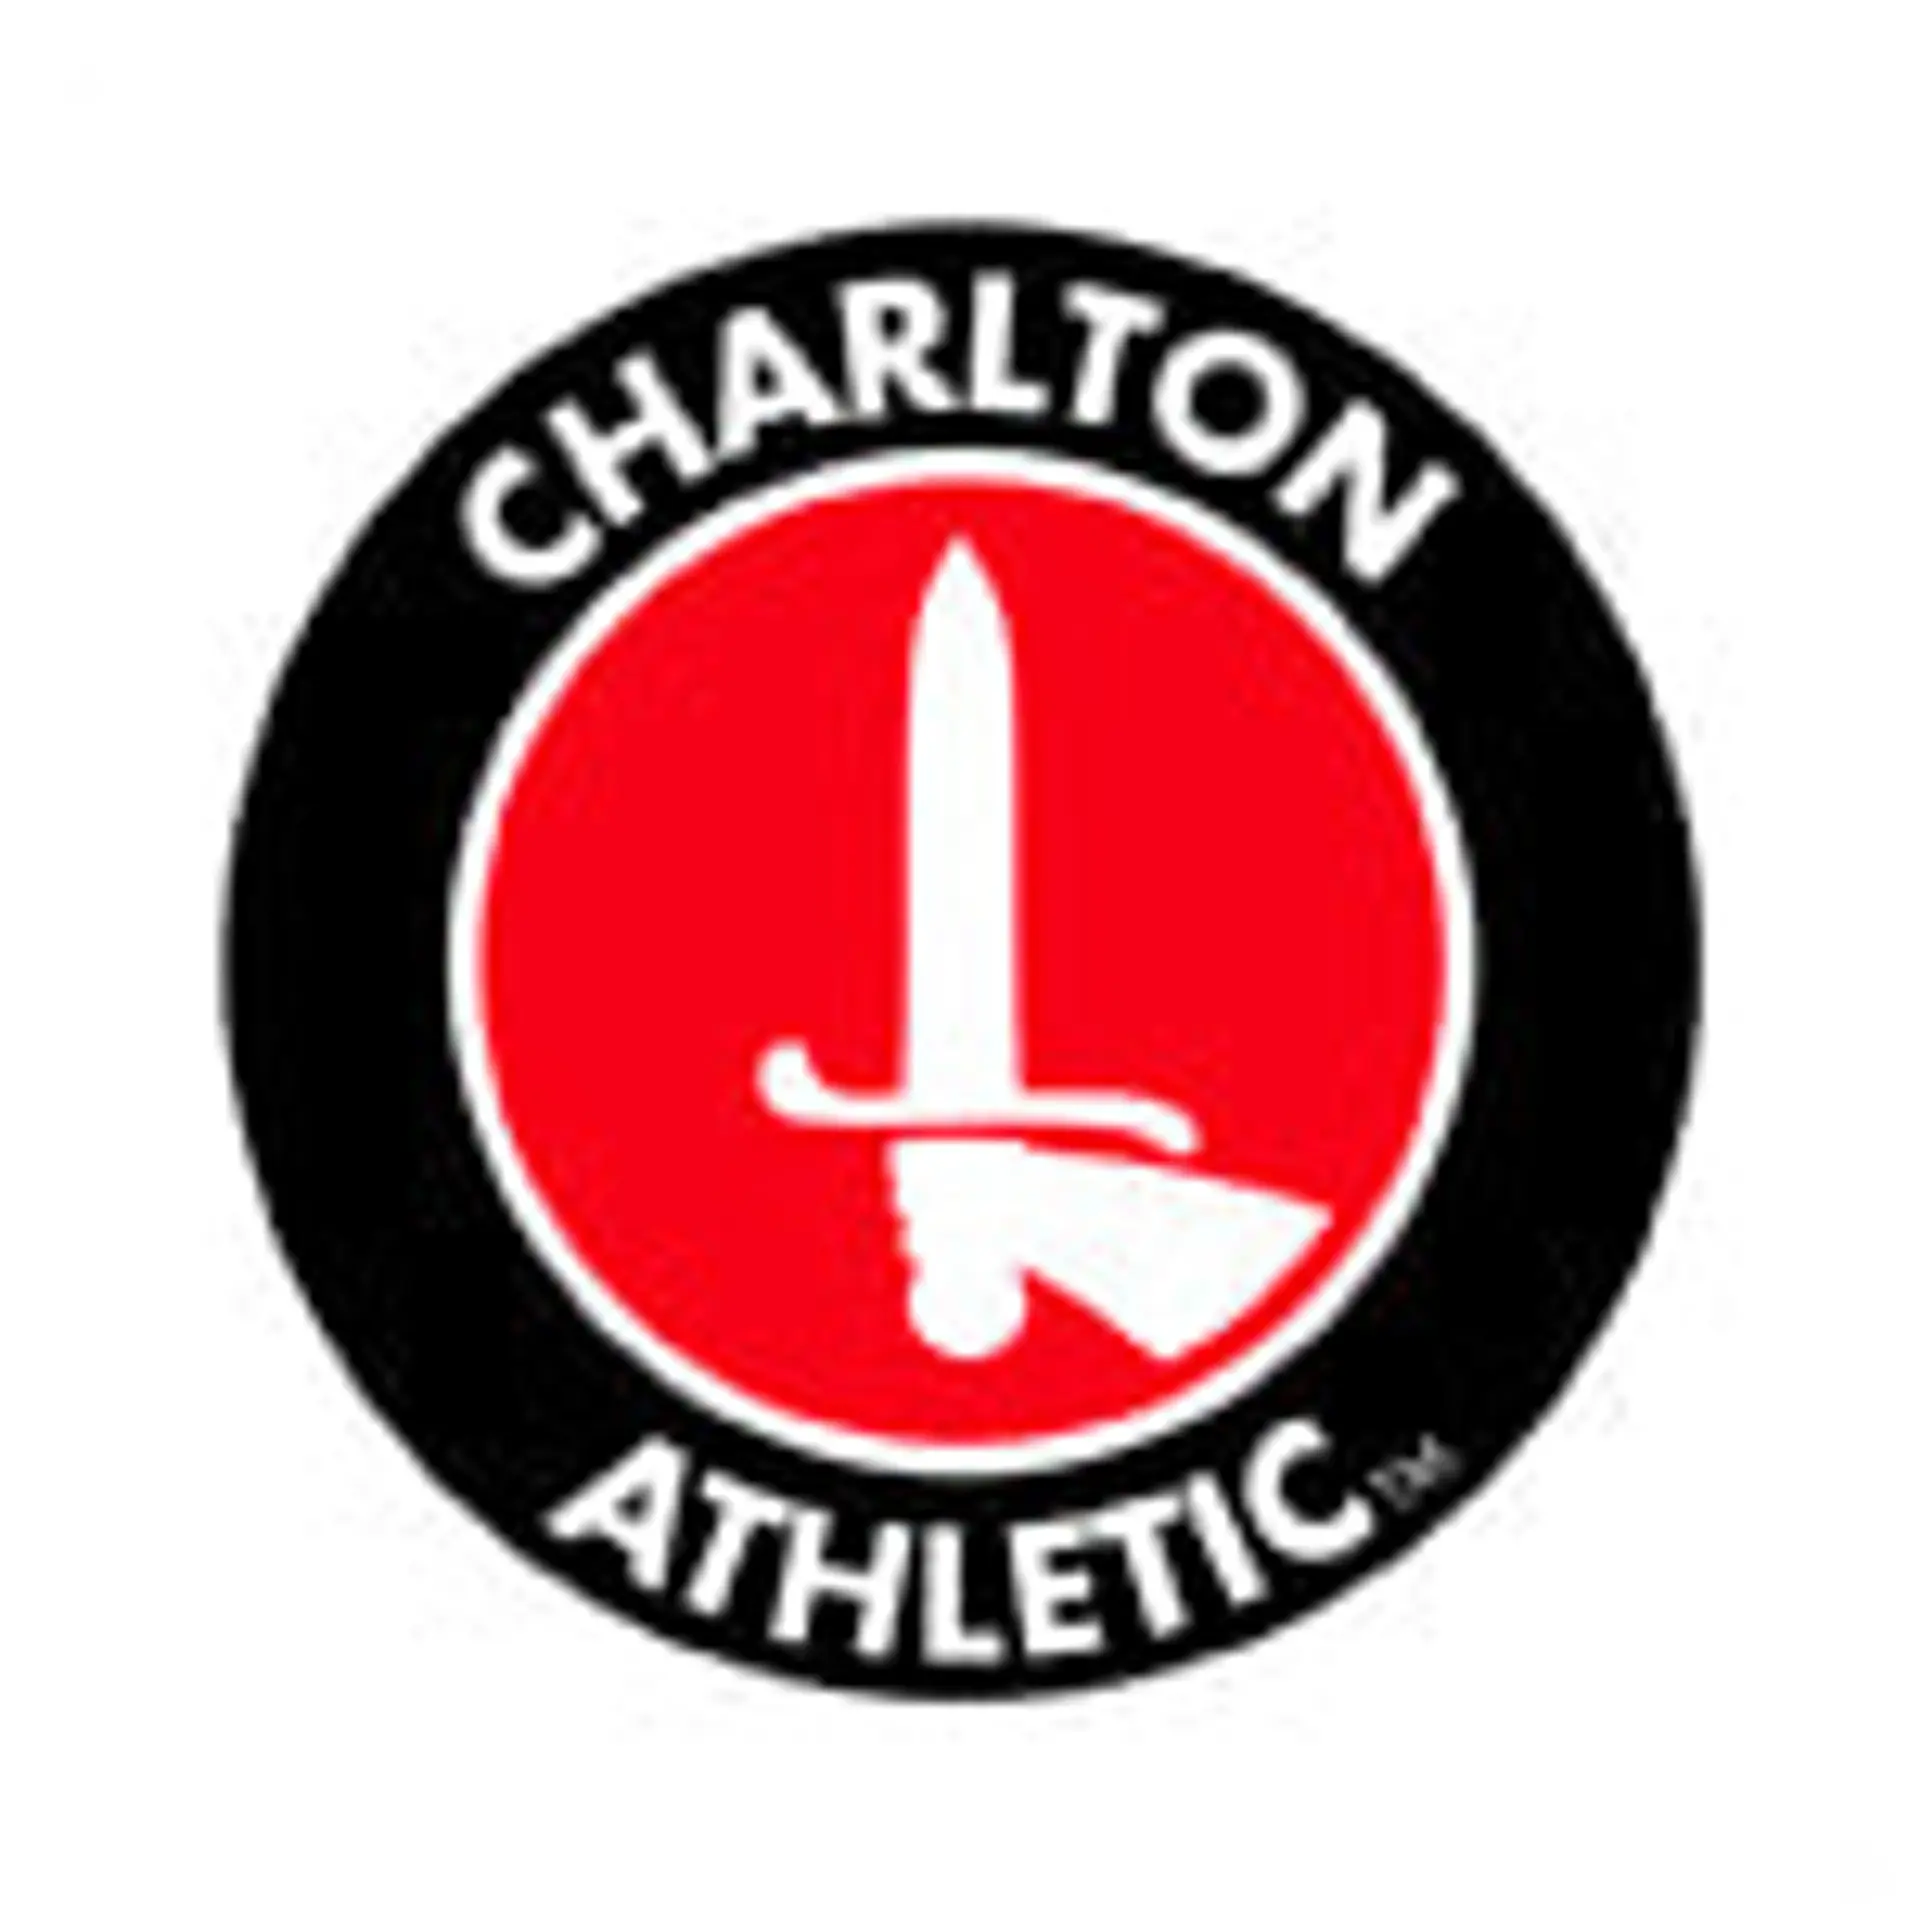 Charlton Athletic Fans 